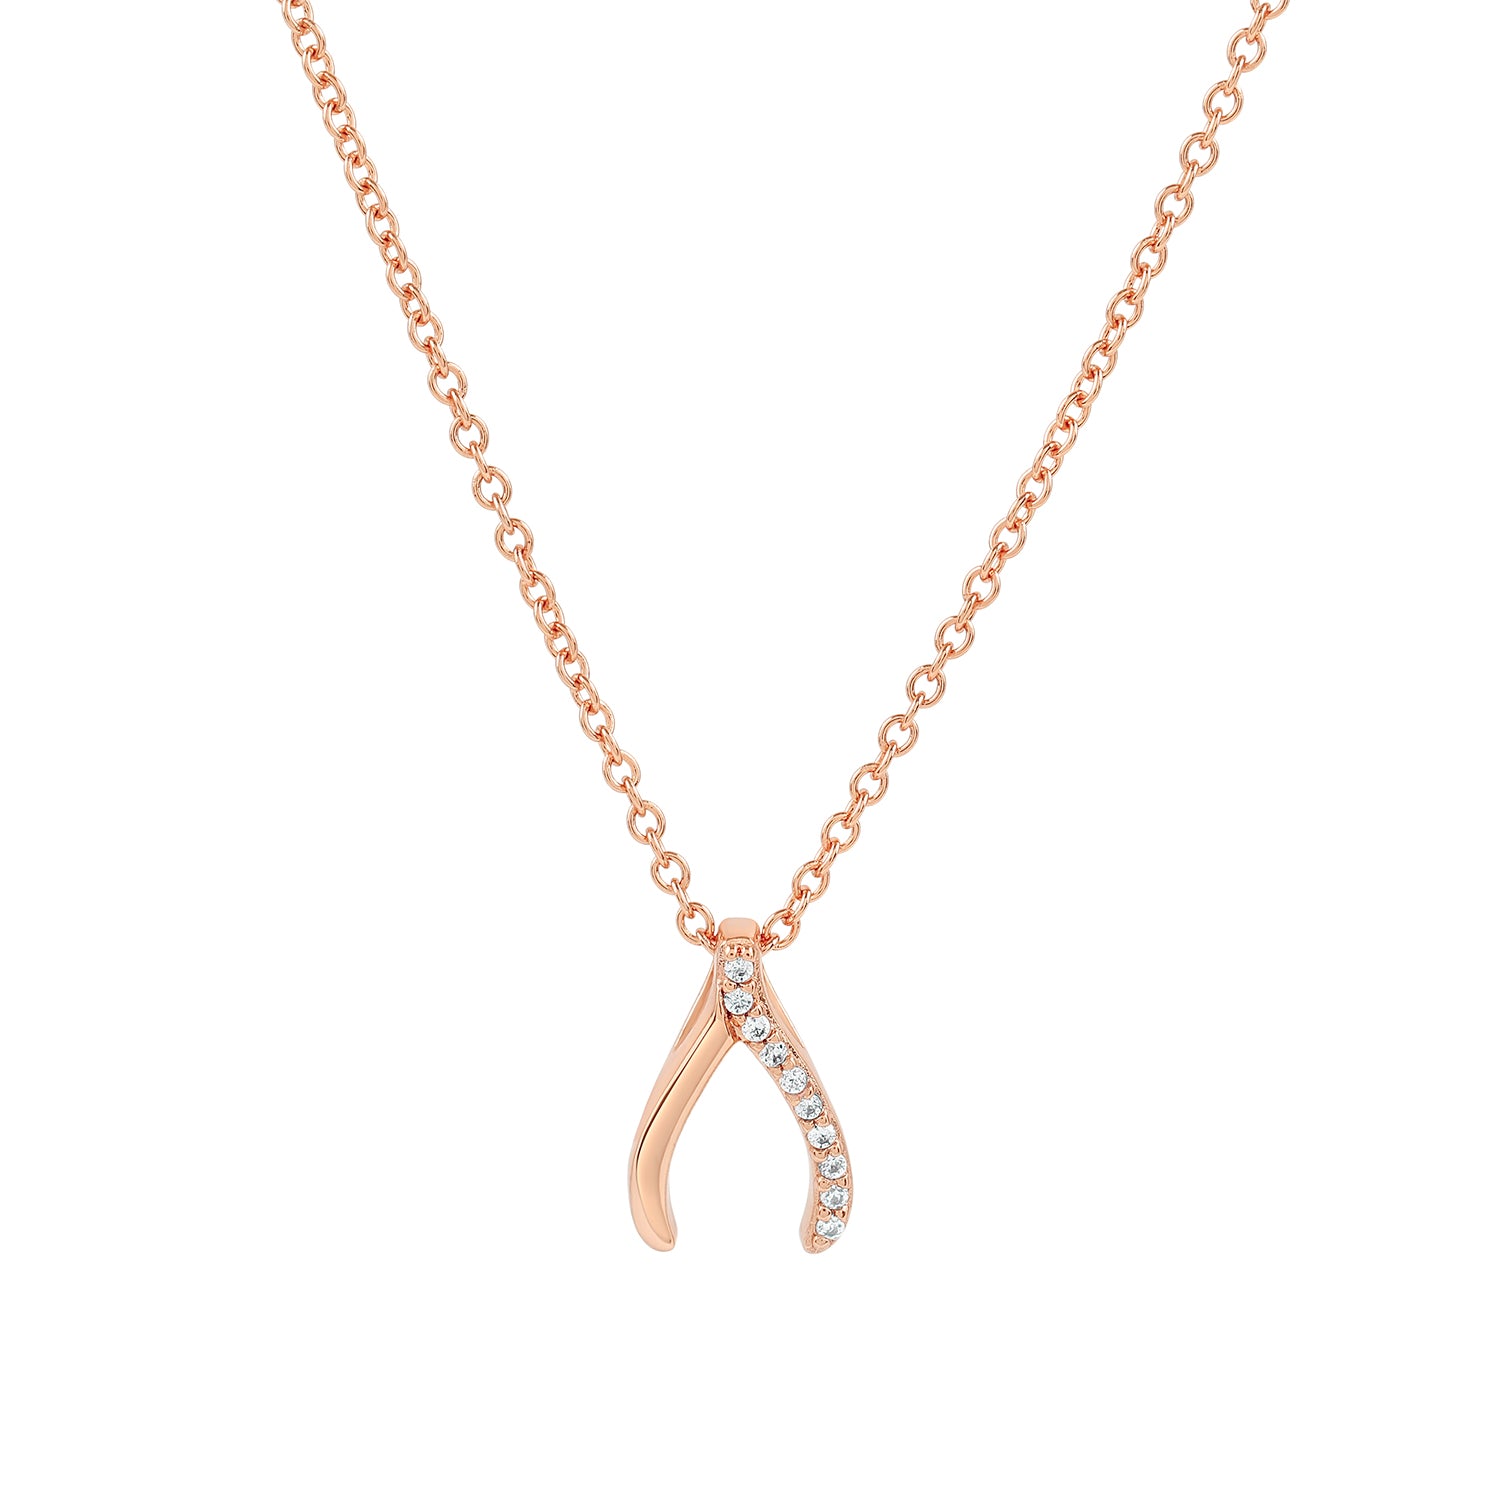 Elegant and minimalist rose gold wishbone pendant necklace set with cubic zirconia stones.